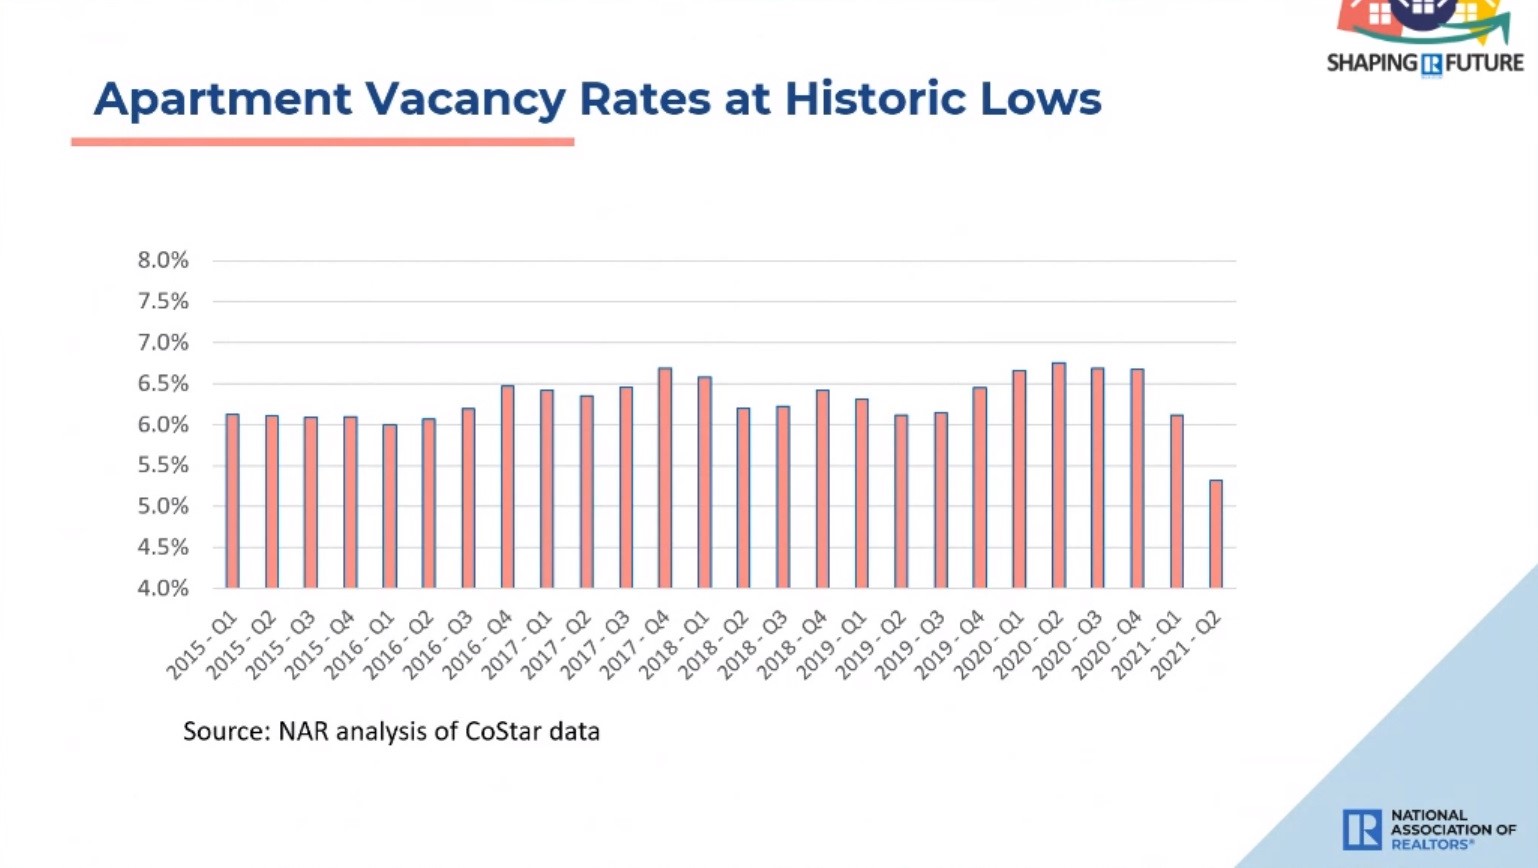 Low vacancy rates